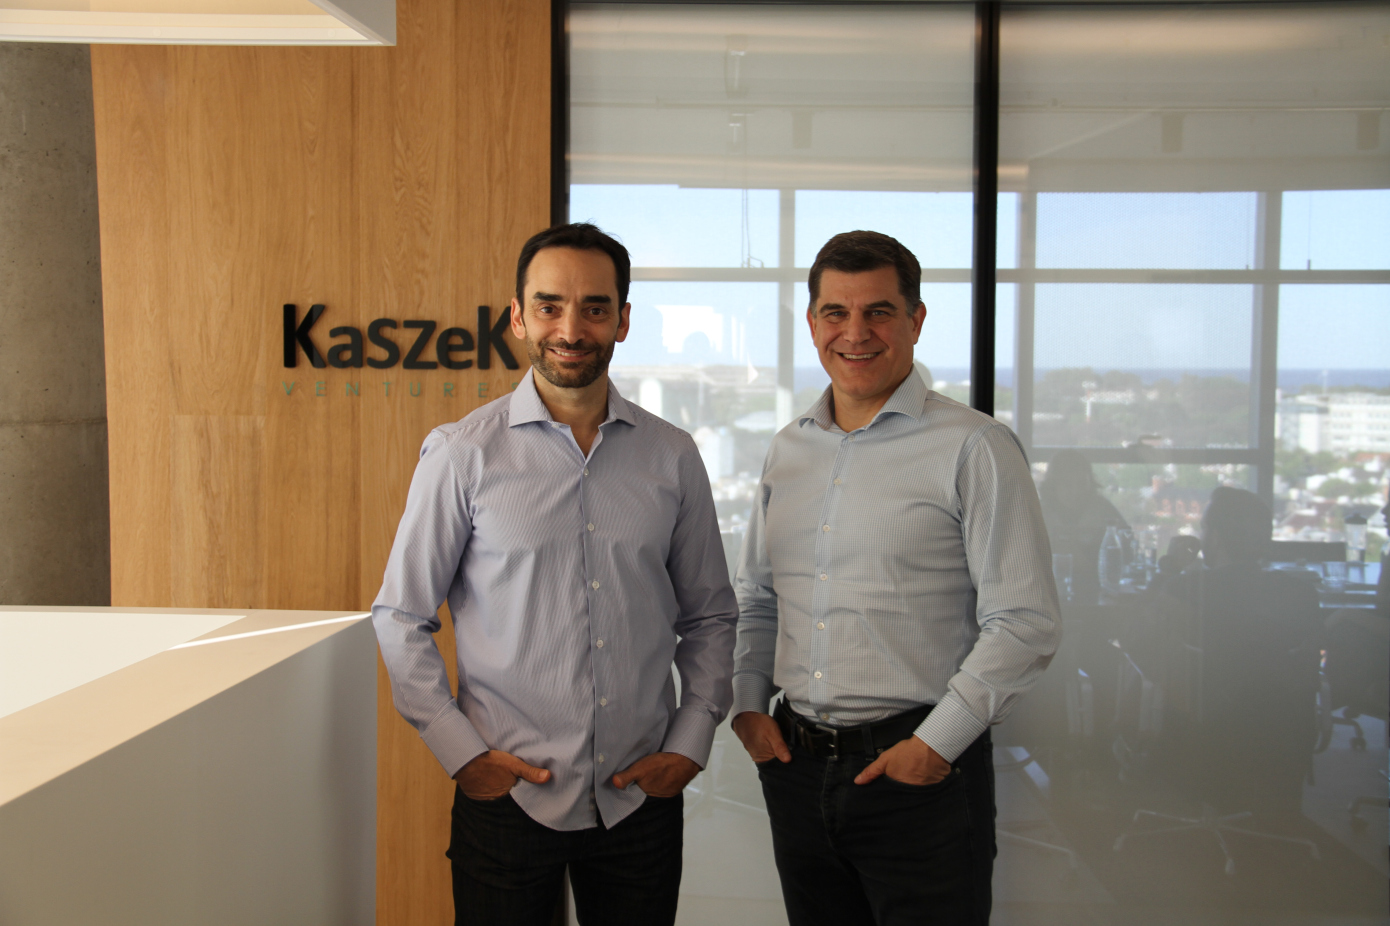 Kaszek founders standing in front of logo